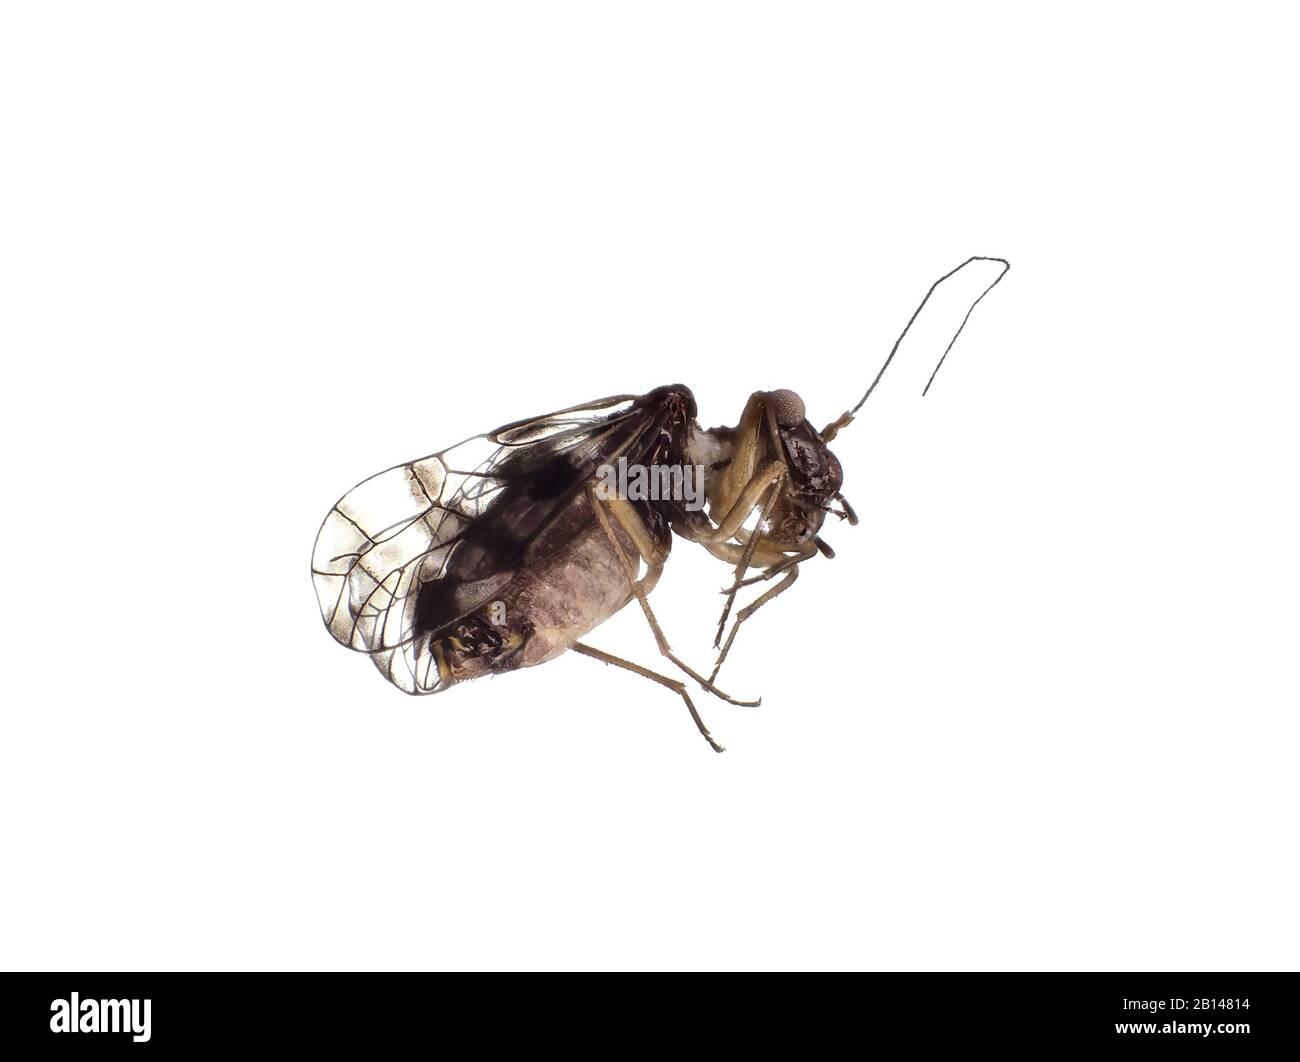 Winzige, Erwachsene Barkluse (Psocoptera), etwa 2 mm lang ohne Antennen, unter dem Mikroskop Stockfoto